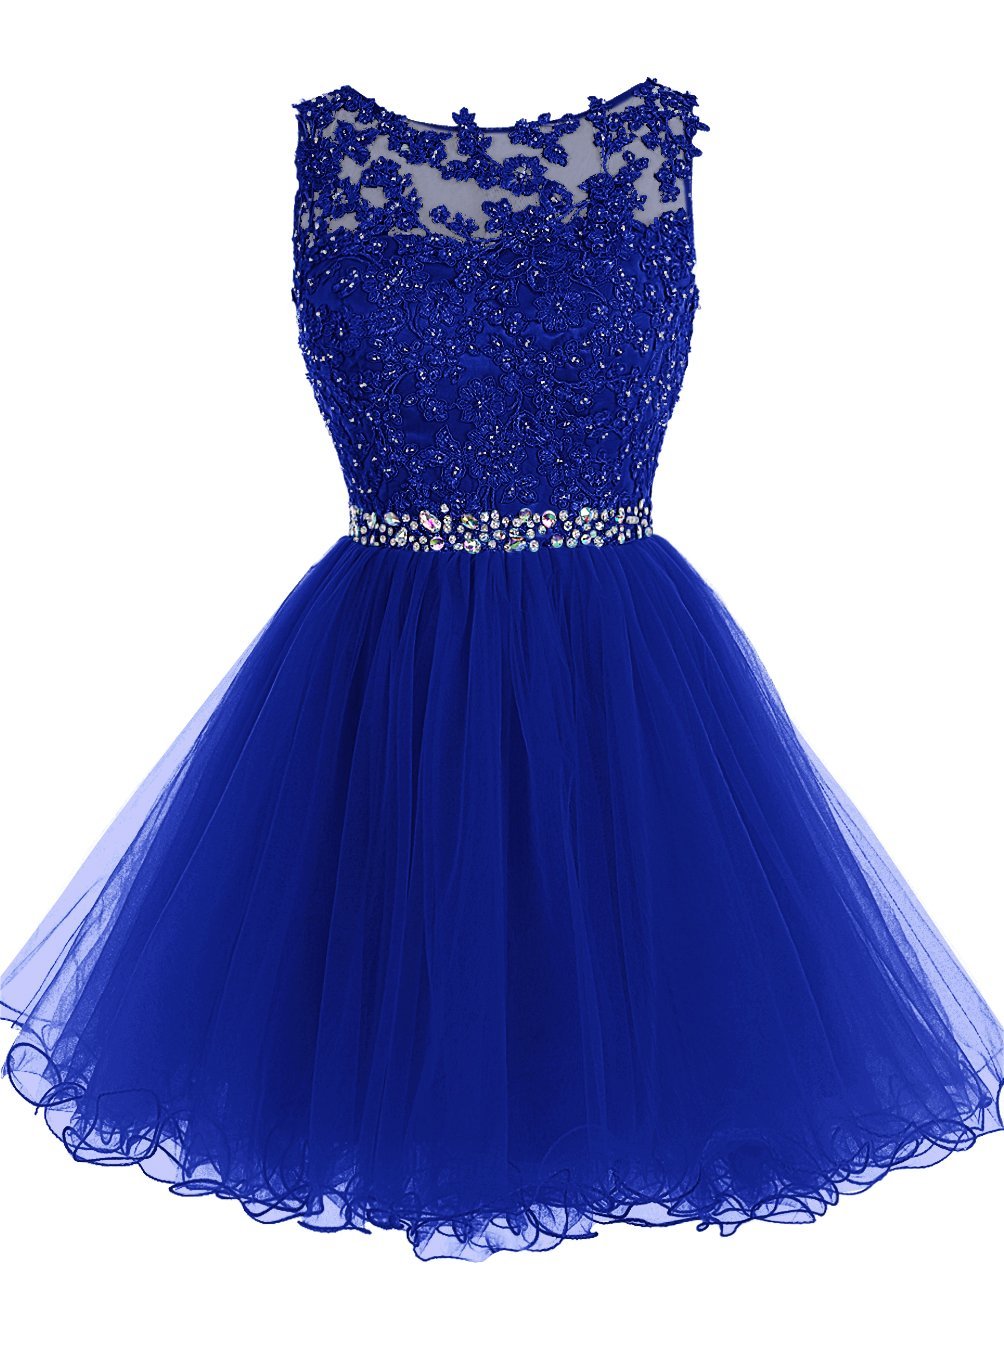 Royal Blue Keyhole Back Cocktail Dress, Party Dress With Lace Appliques Bodice,h3344